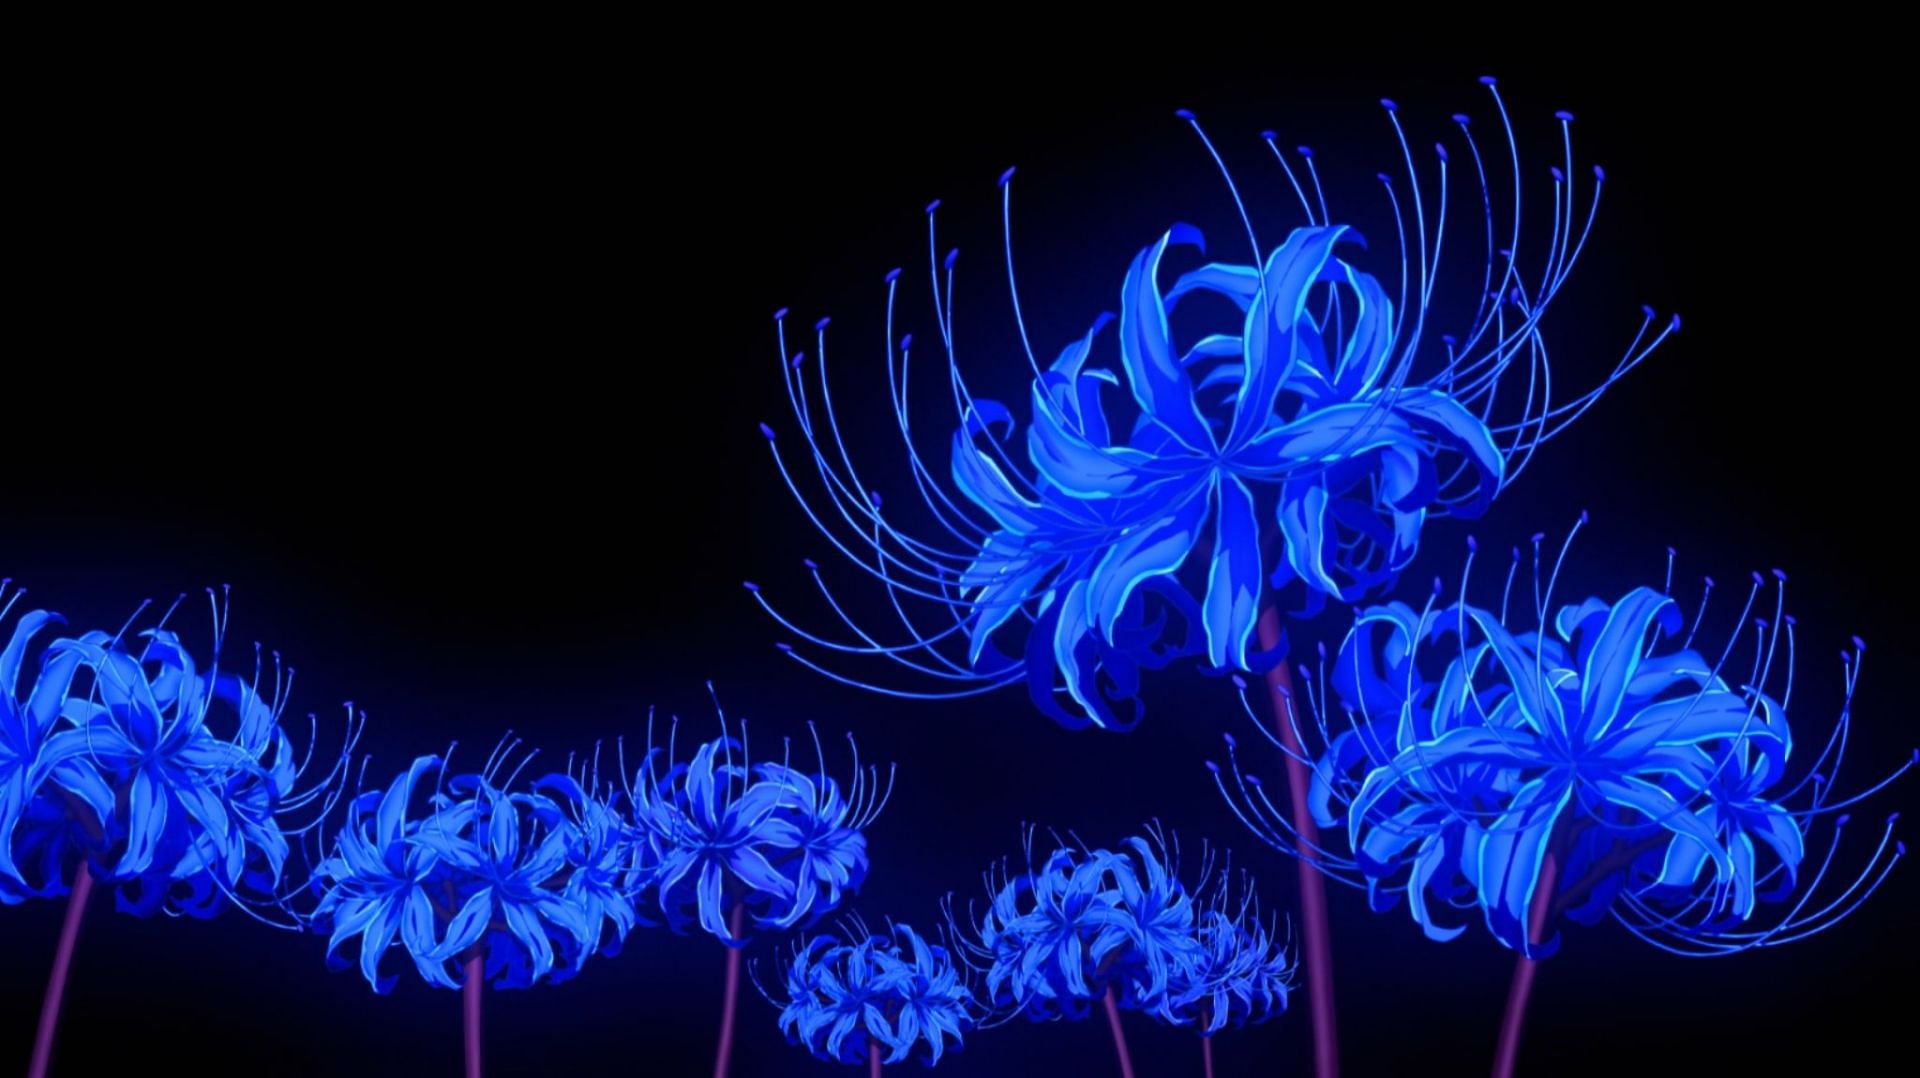 Blue Spider Lily (Image via Ufotable)